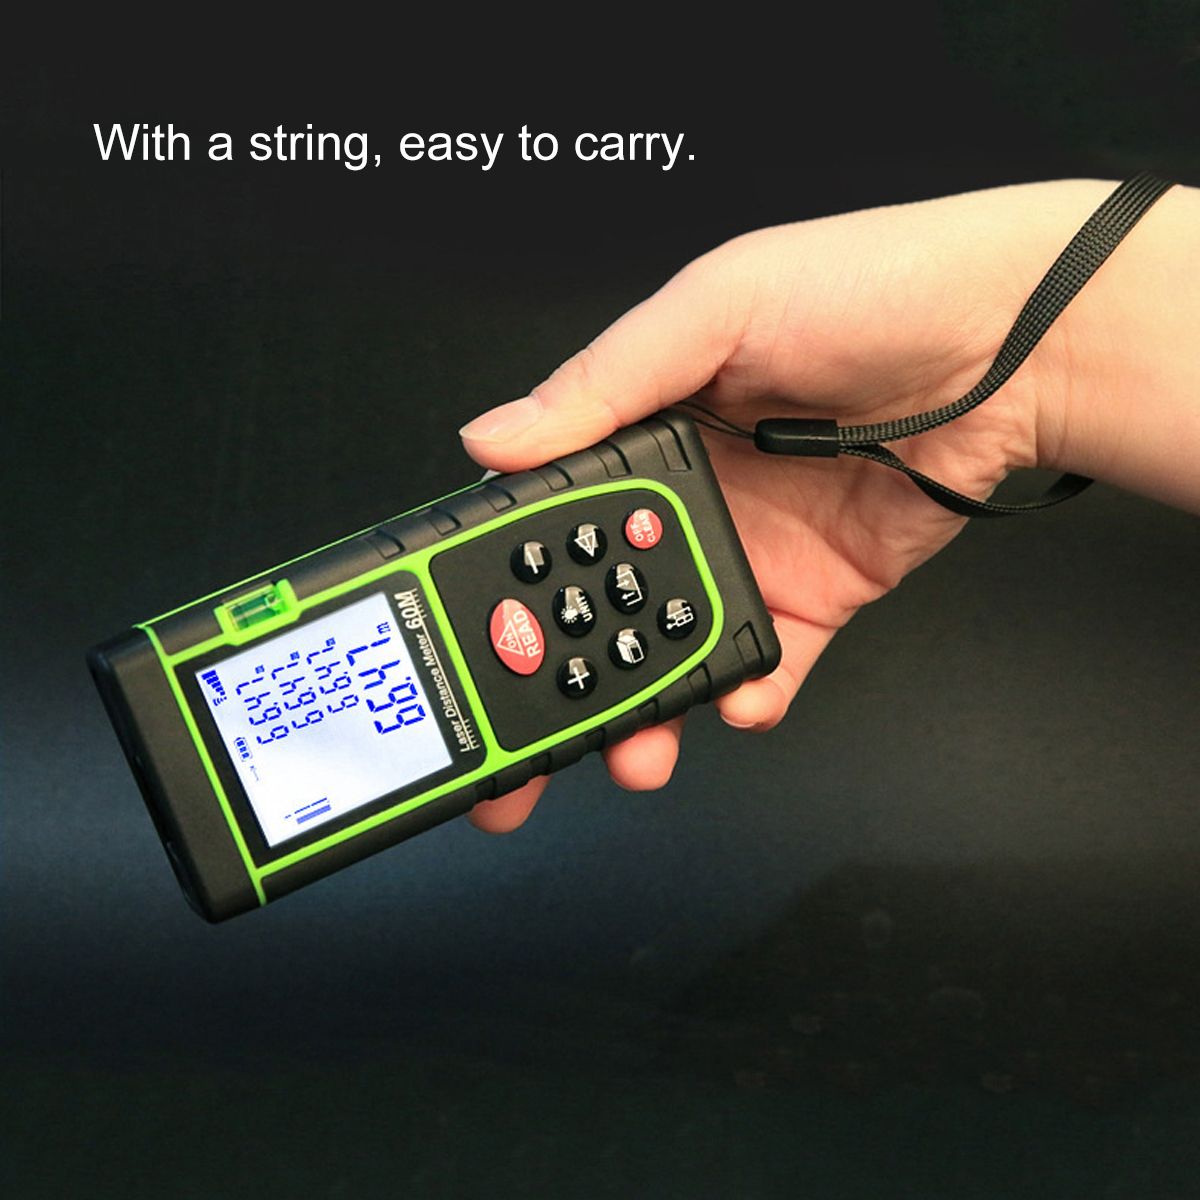 Portable-Handheld-Digital-Laser-Point-Distance-Meter-Range-Finder-Measure-Tape-One-Button-Operation--1471149